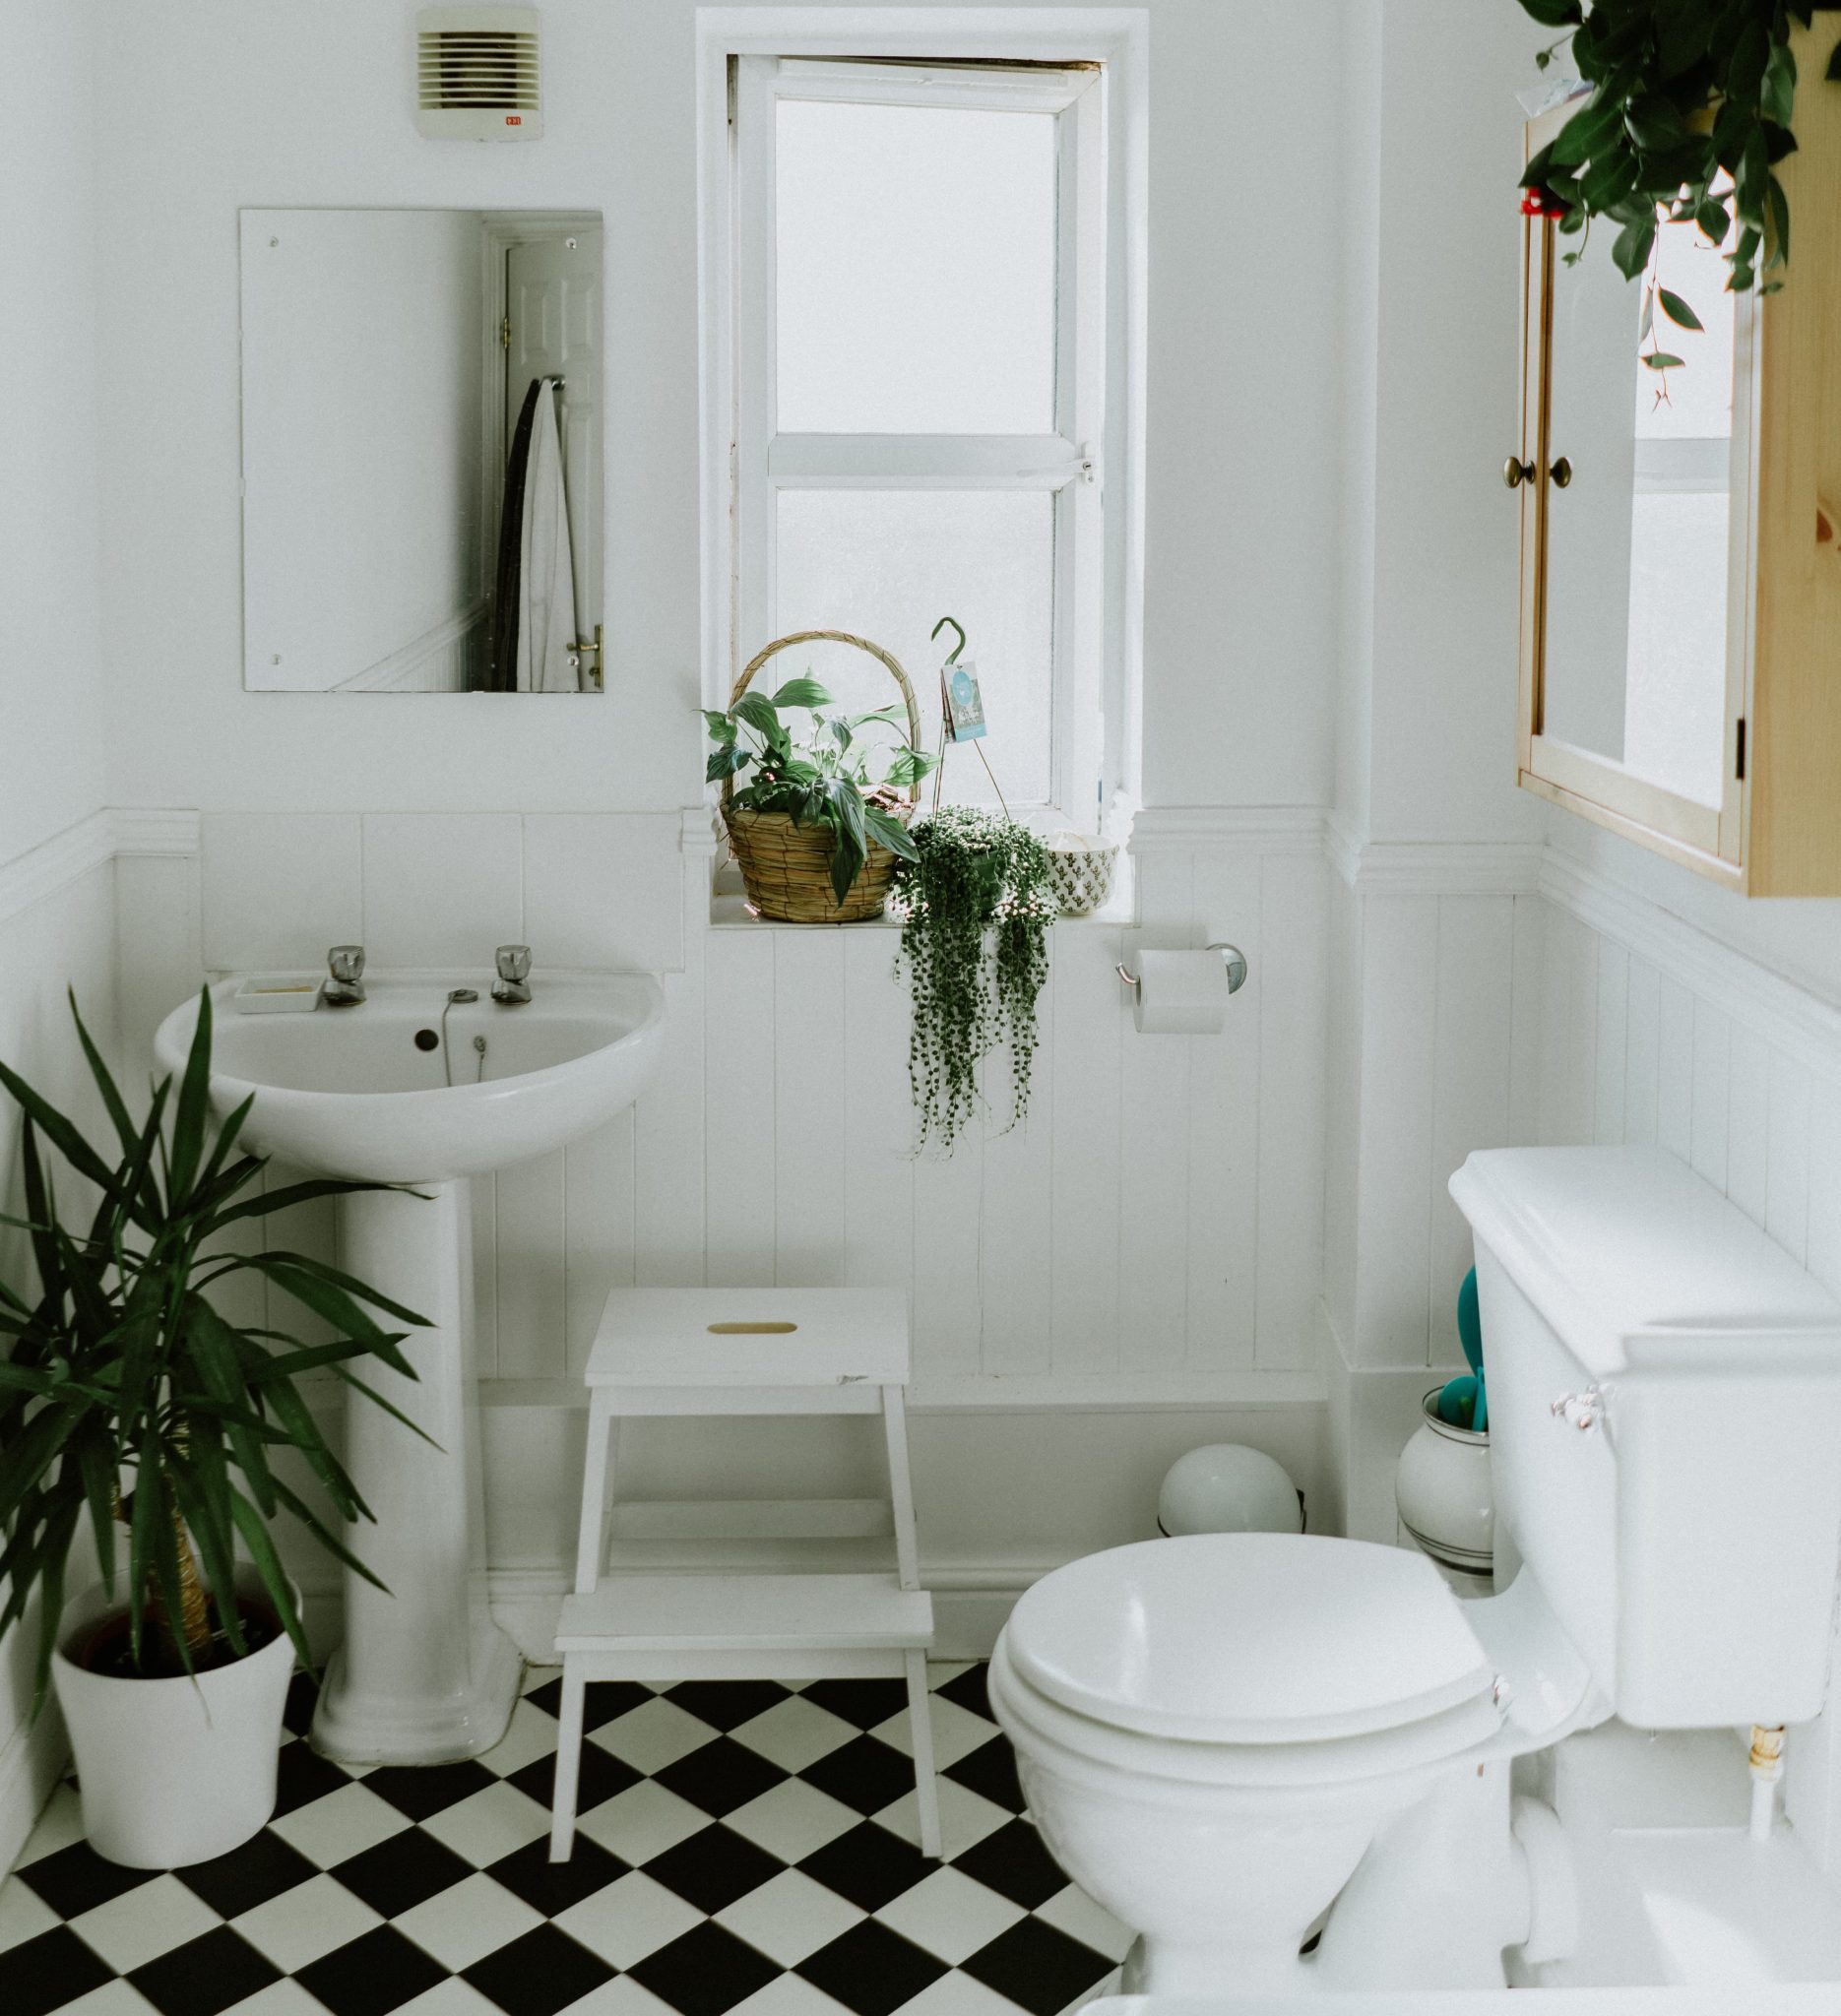 An elegant bathroom - all in white.